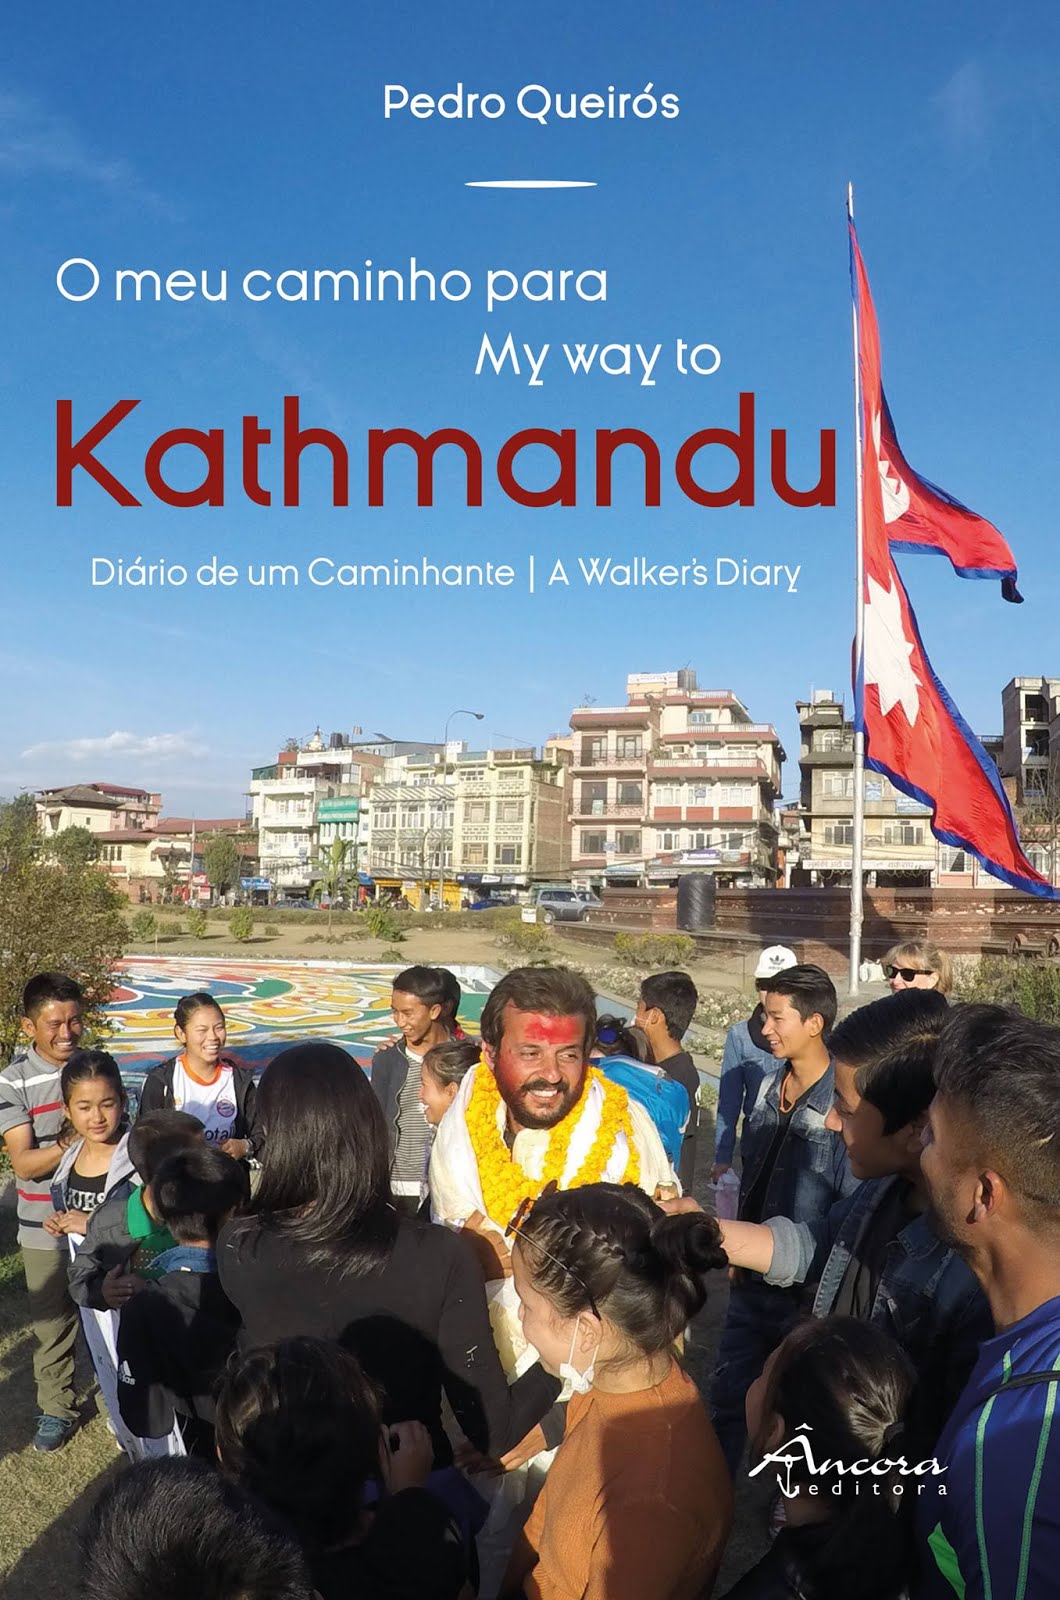 BOOK "MY WAY TO KATHMANDU"